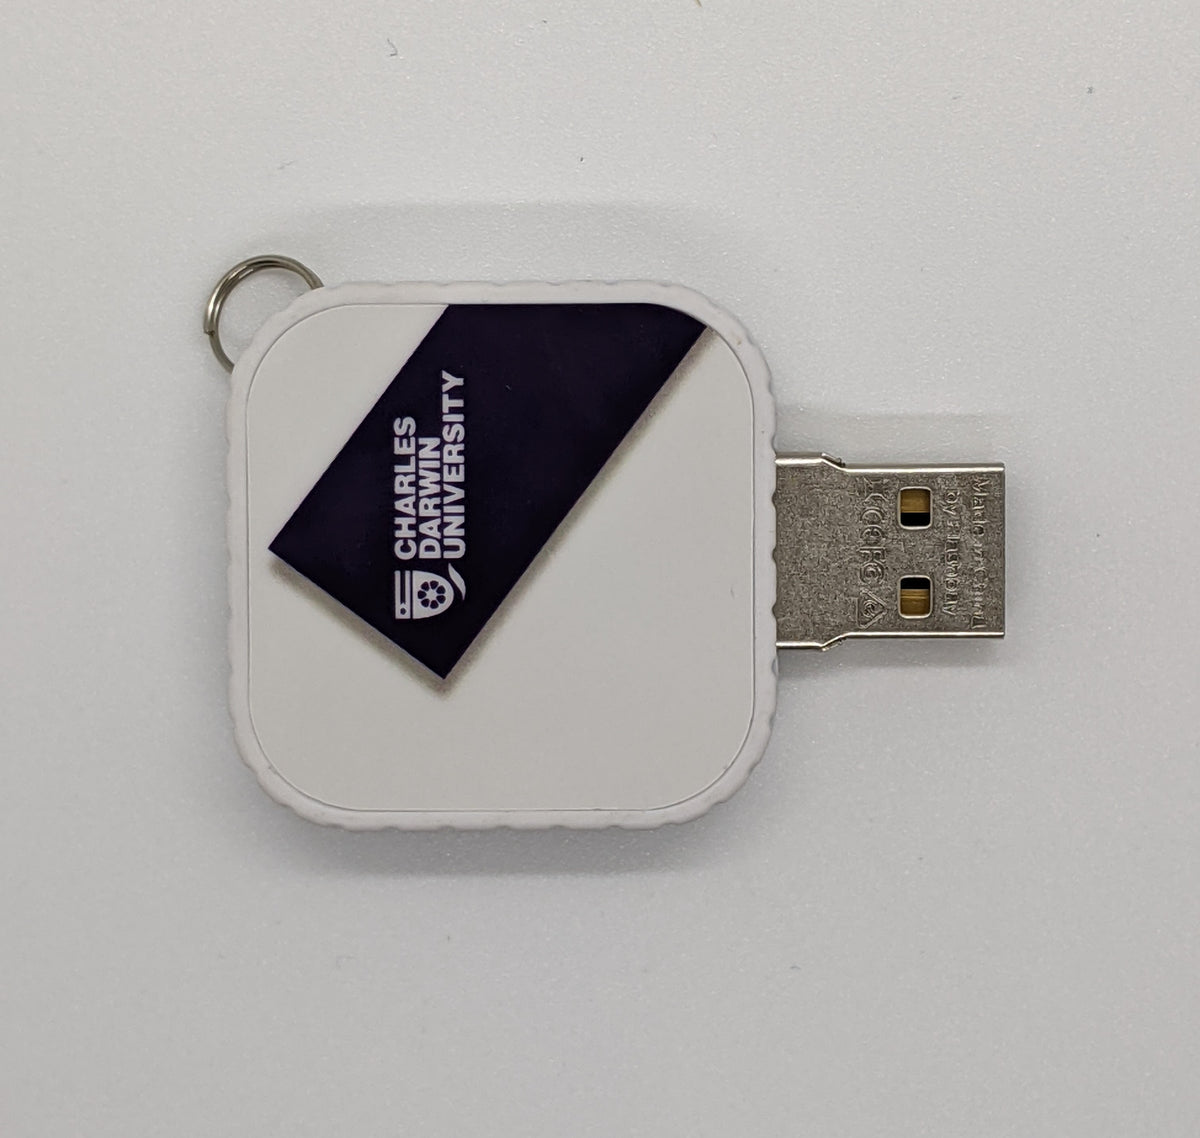 CDU USB 16GB